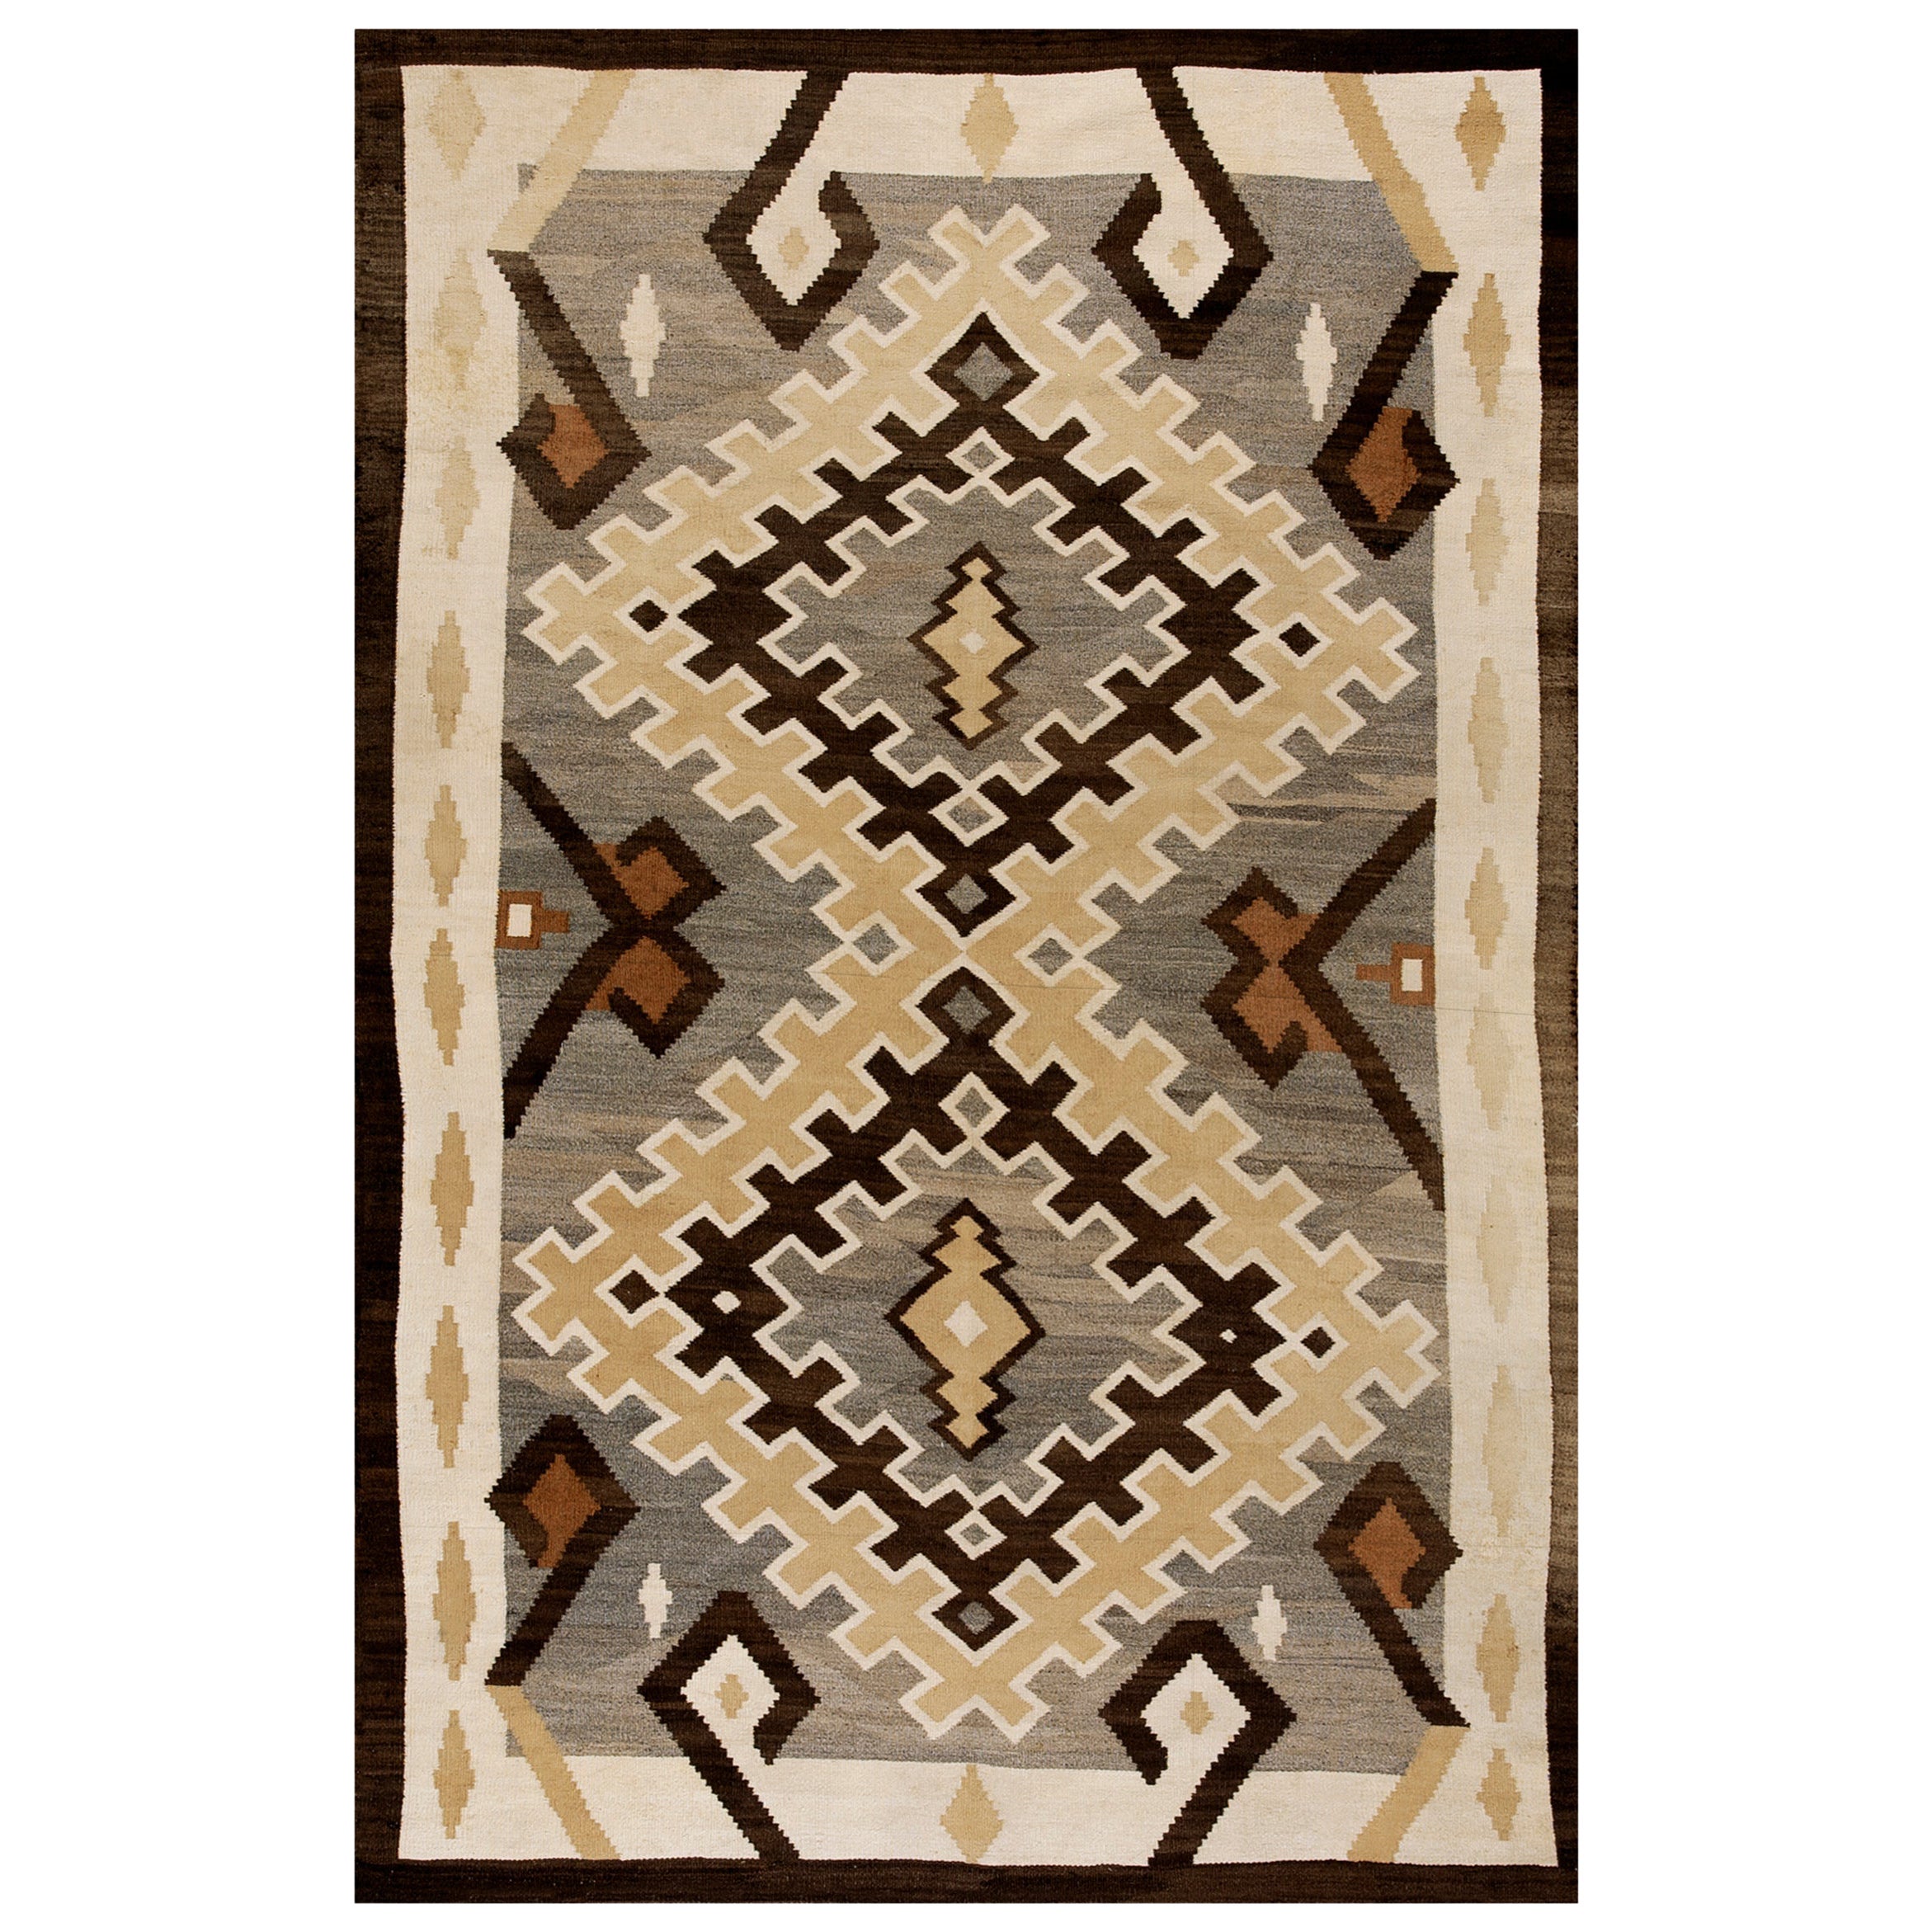 1930s American Navajo "Two Grey Hills" Carpet ( 5' x 7' 8'' - 152 x 233 cm )